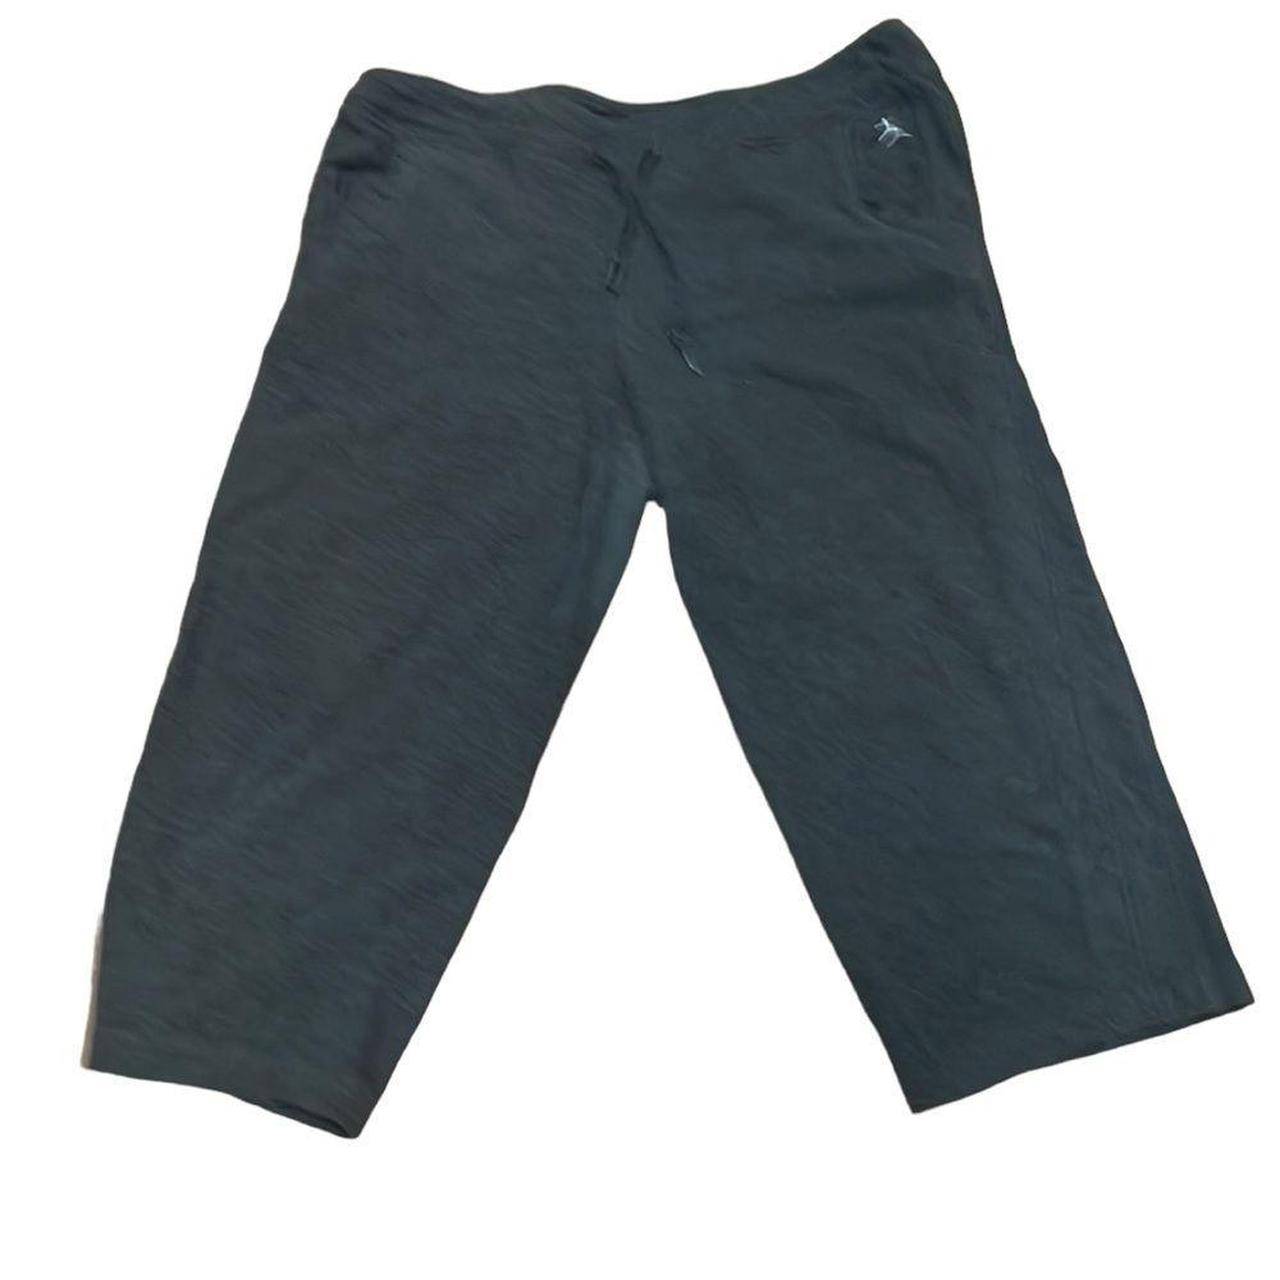 Capri Workout Yoga Pants Gray Large Side pockets - Depop